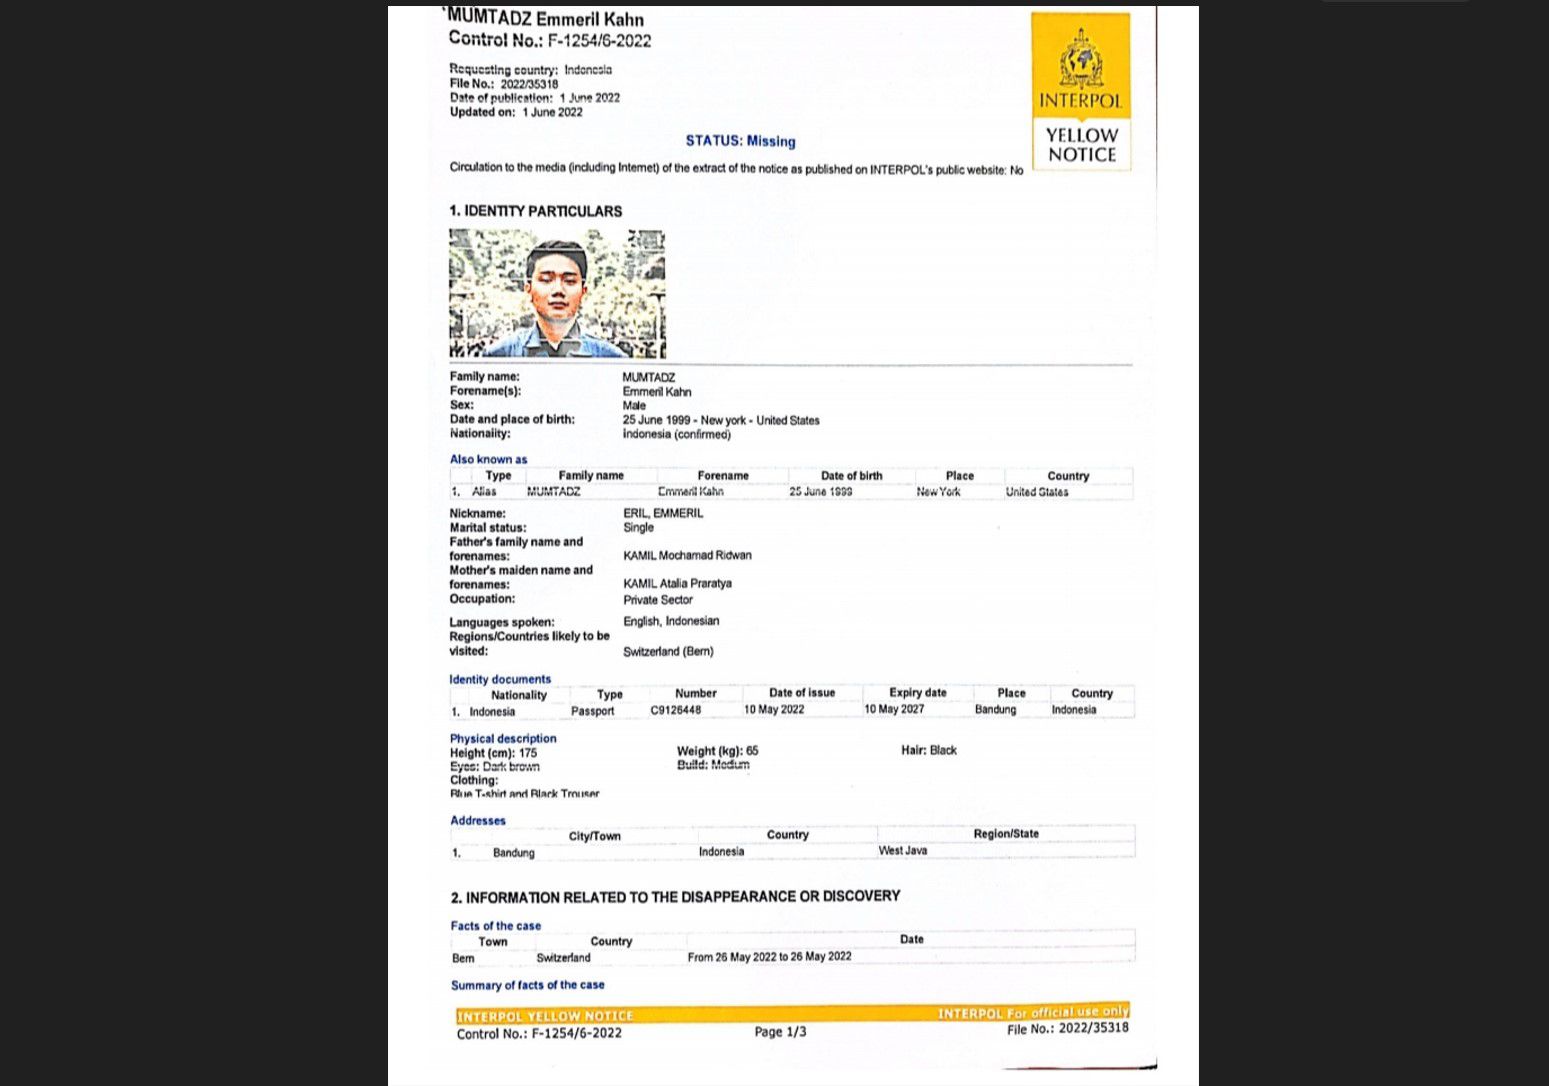 Yellow Notice untuk Emmeril Kahn Mumtadz. Foto: Medcom.id/Dok. Polri